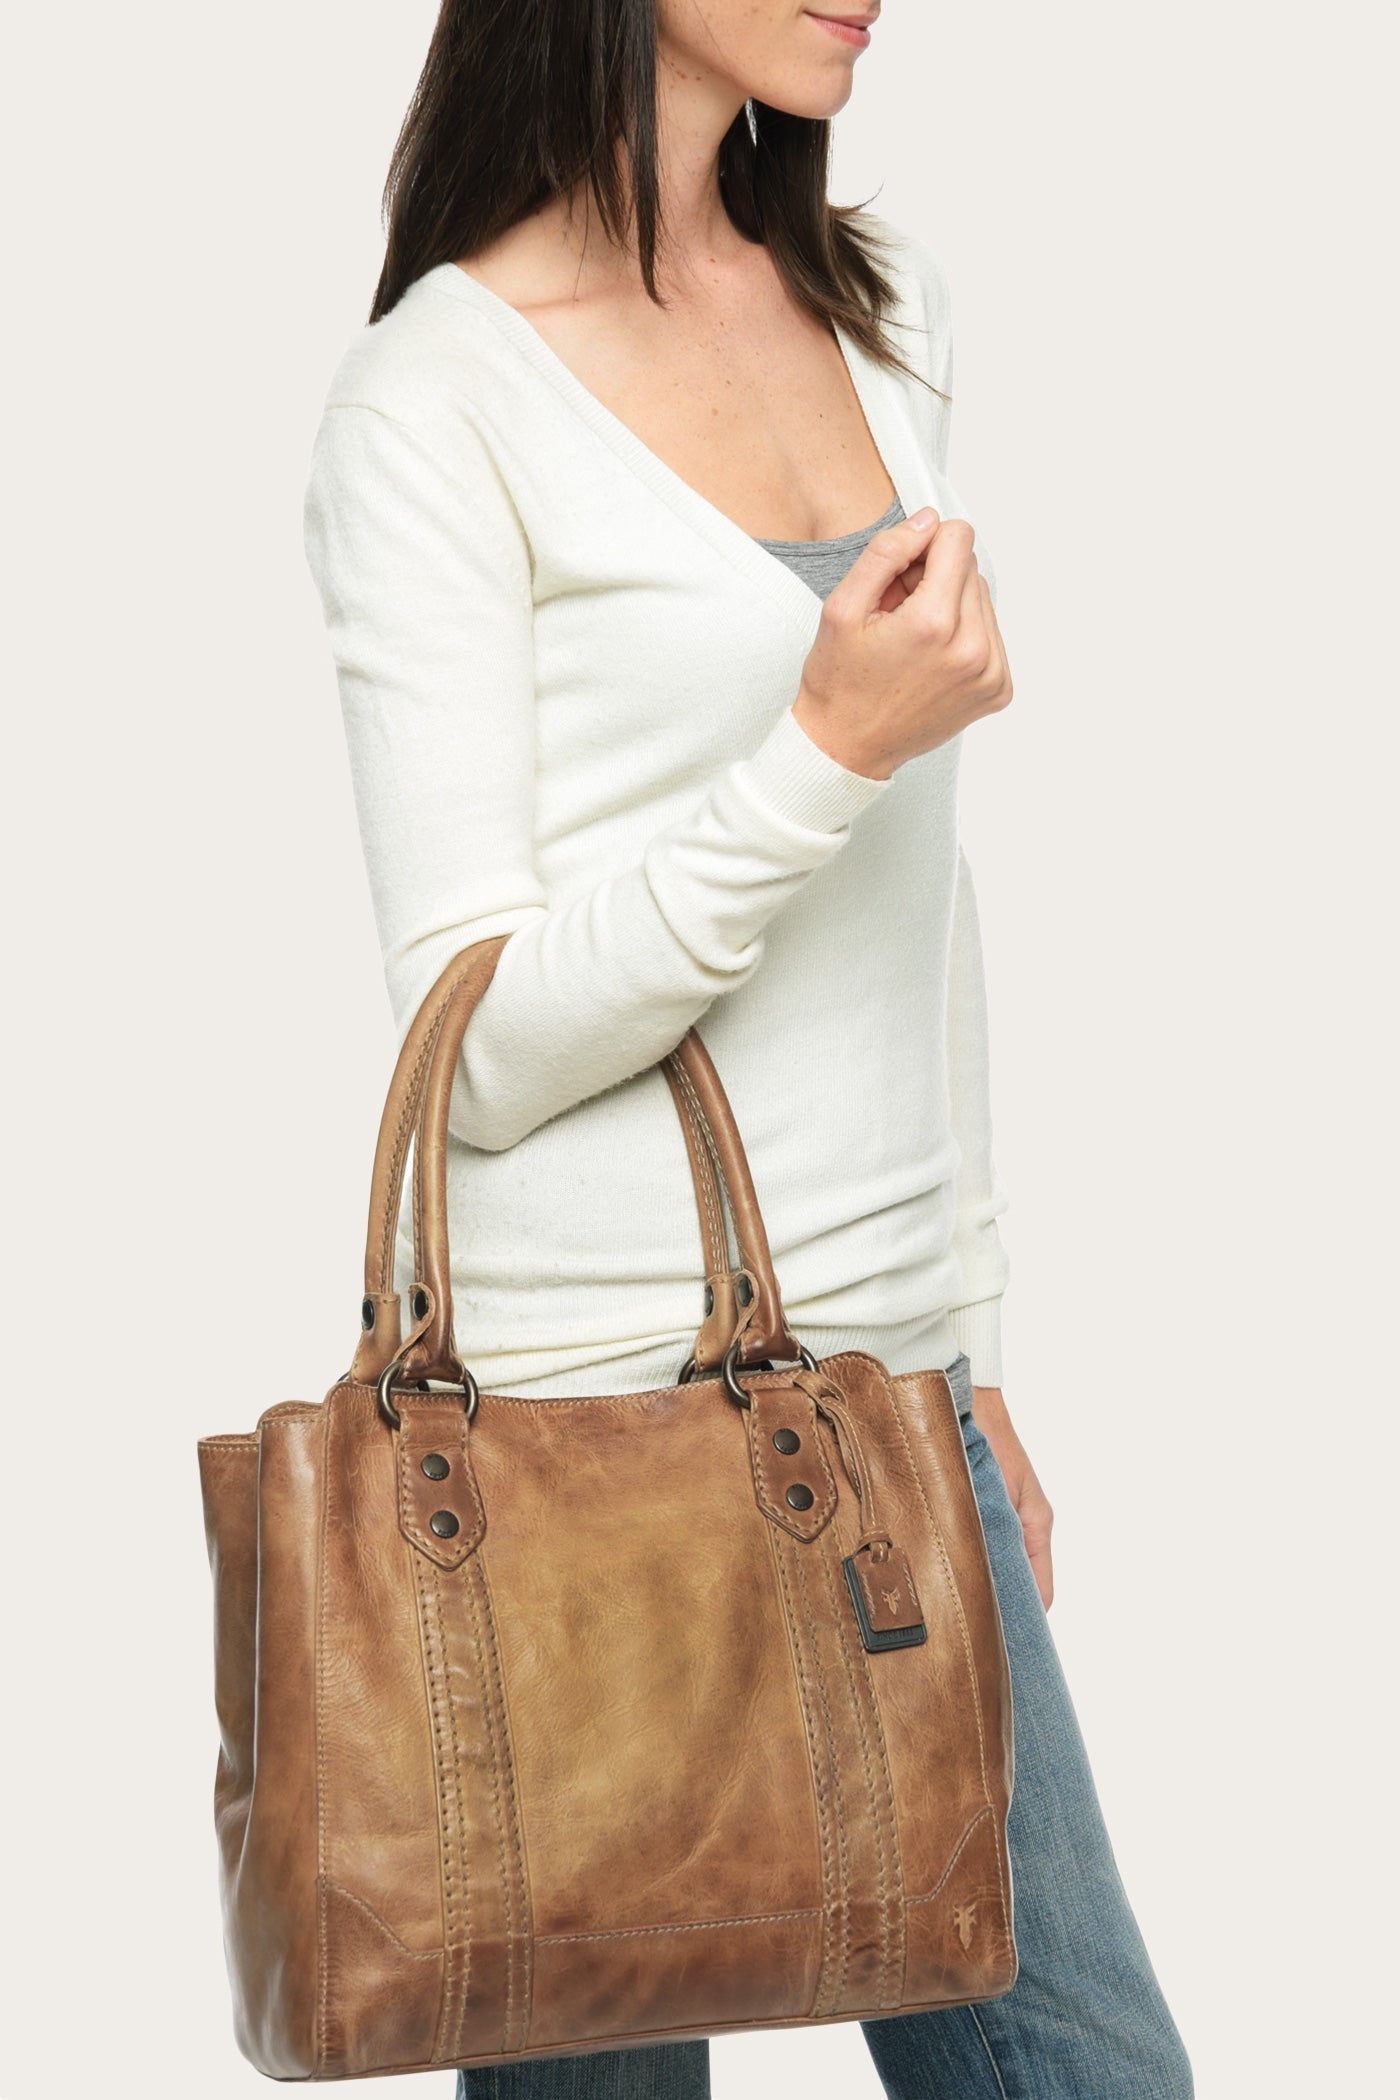 Frye Brooke Leather Studded Bucket Bag with Drawstring Brown | eBay